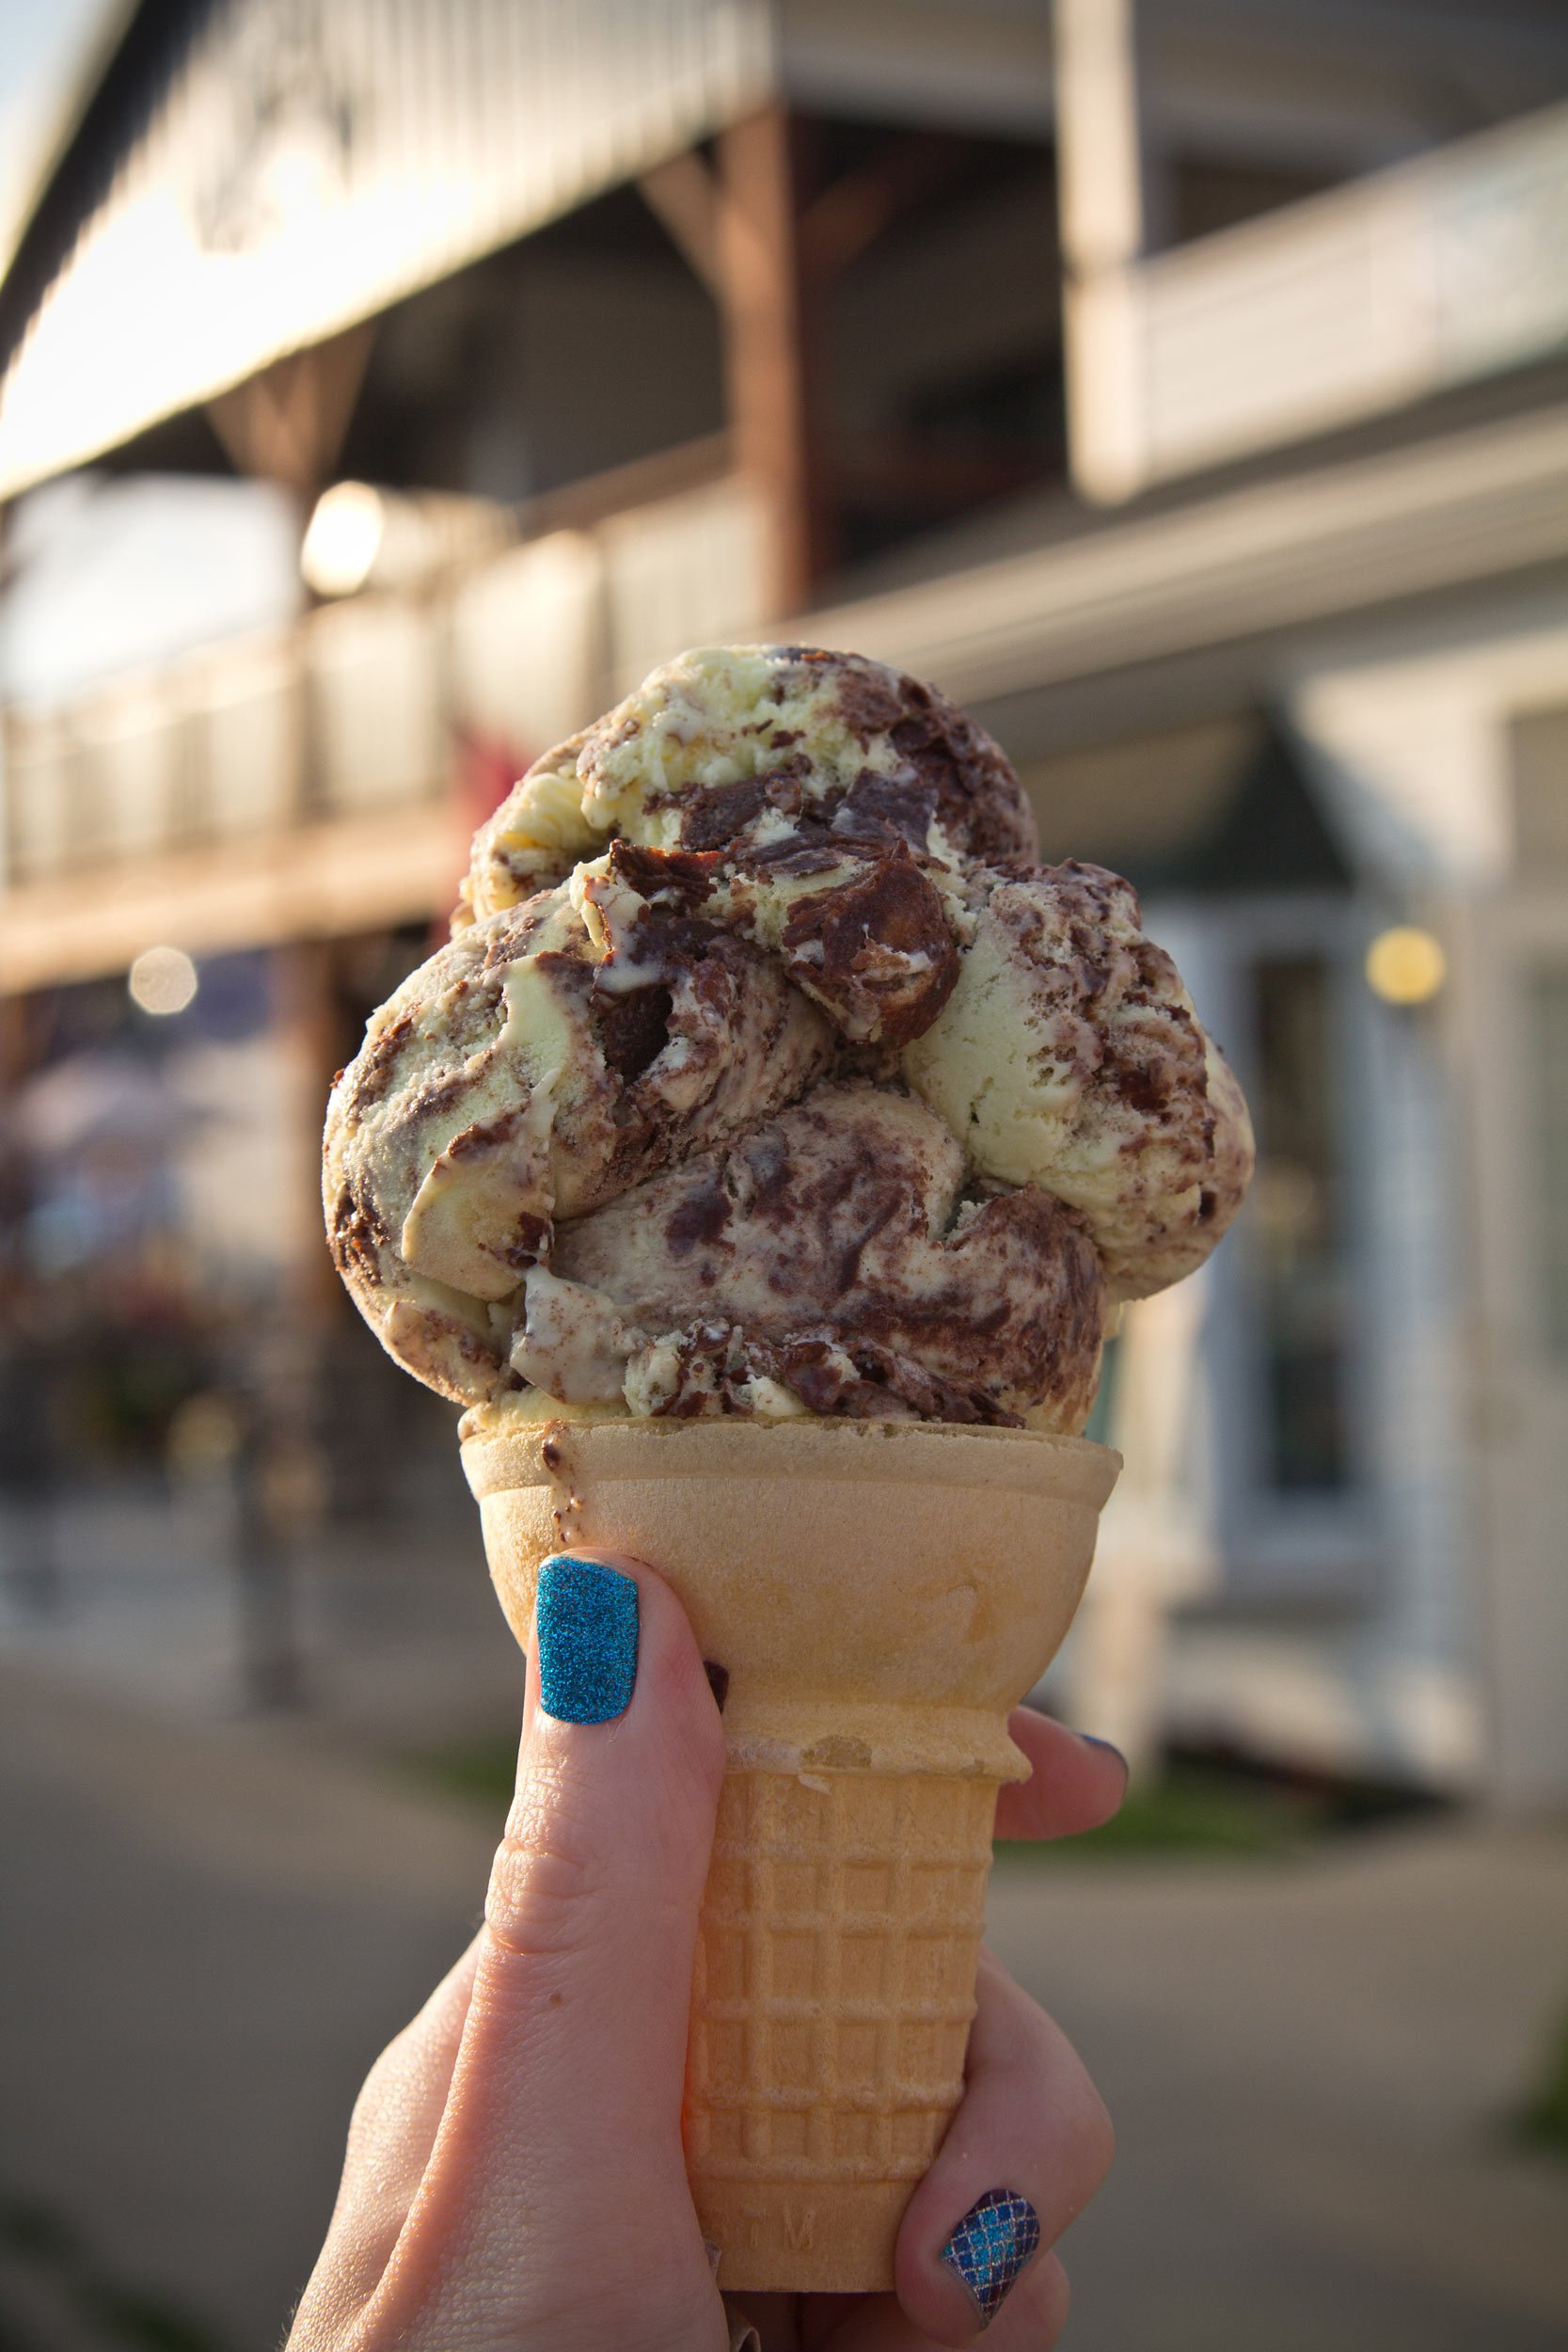 Bemus-Point-ice-cream.jpg